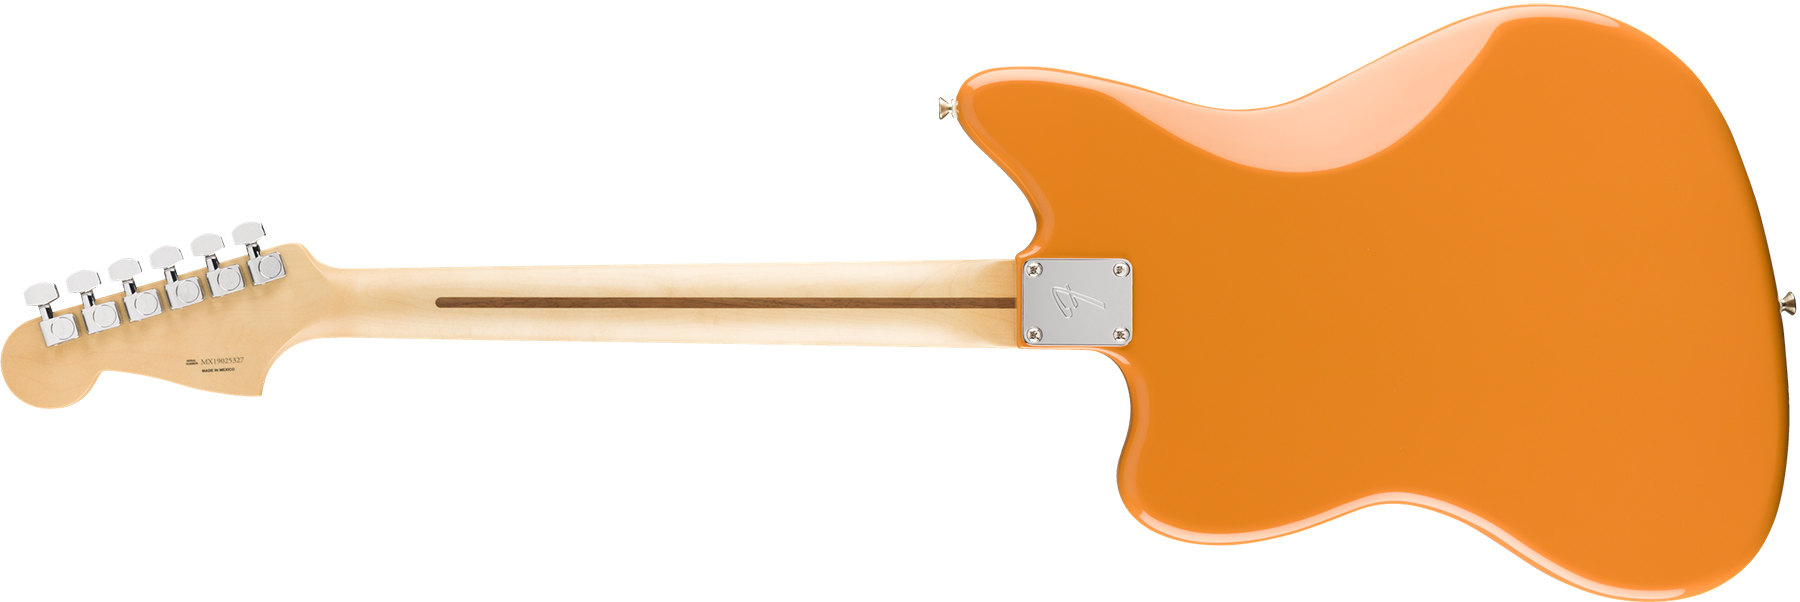 Fender Jazzmaster Player Mex Hh Pf - Capri Orange - Retro rock electric guitar - Variation 1